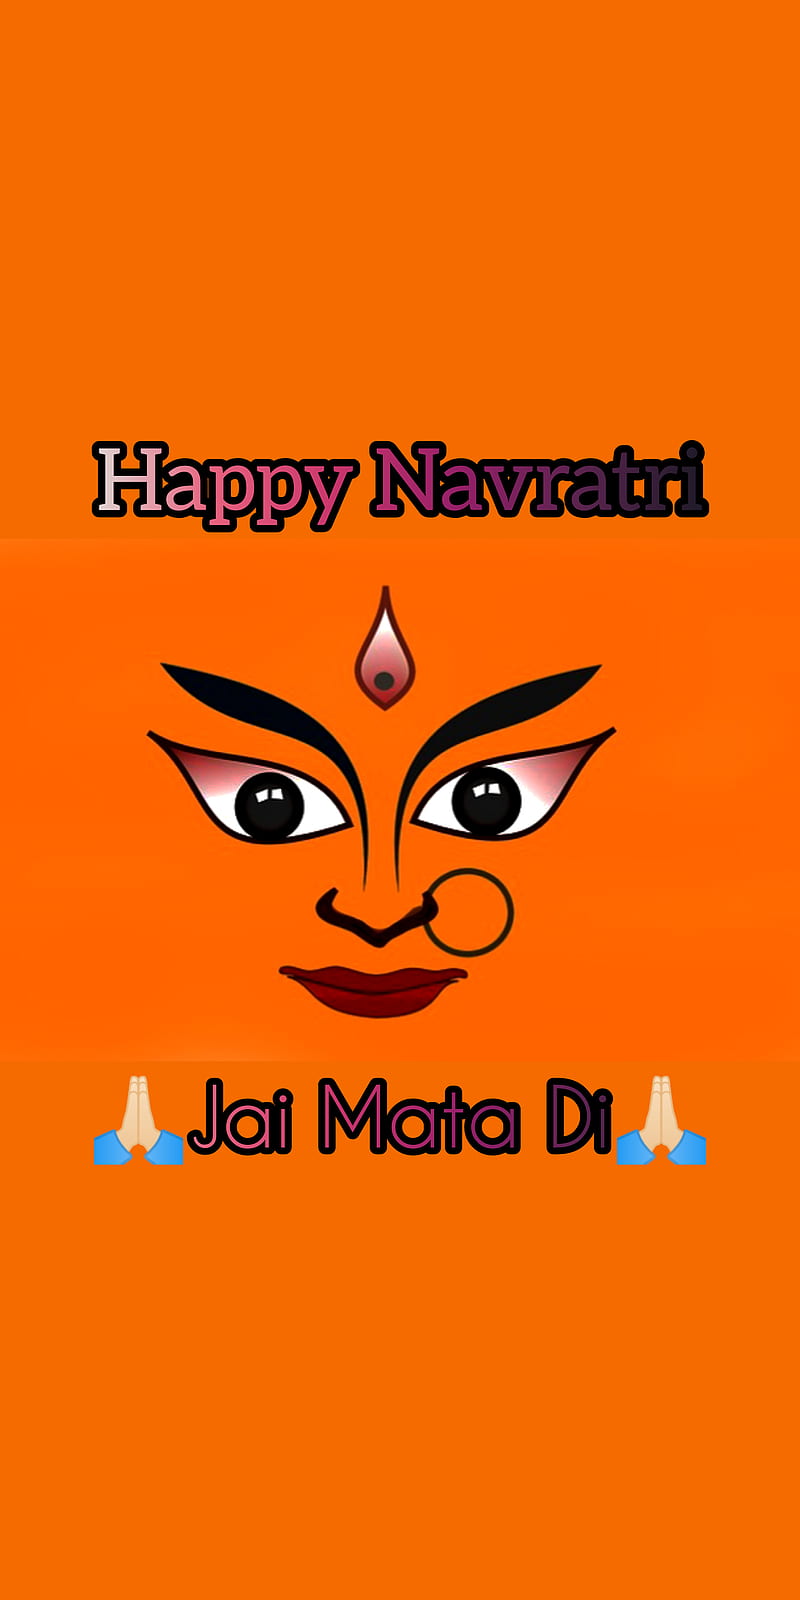 Navratri 2022: When is Maha Ashtami and Navami in Navratri? Know ...